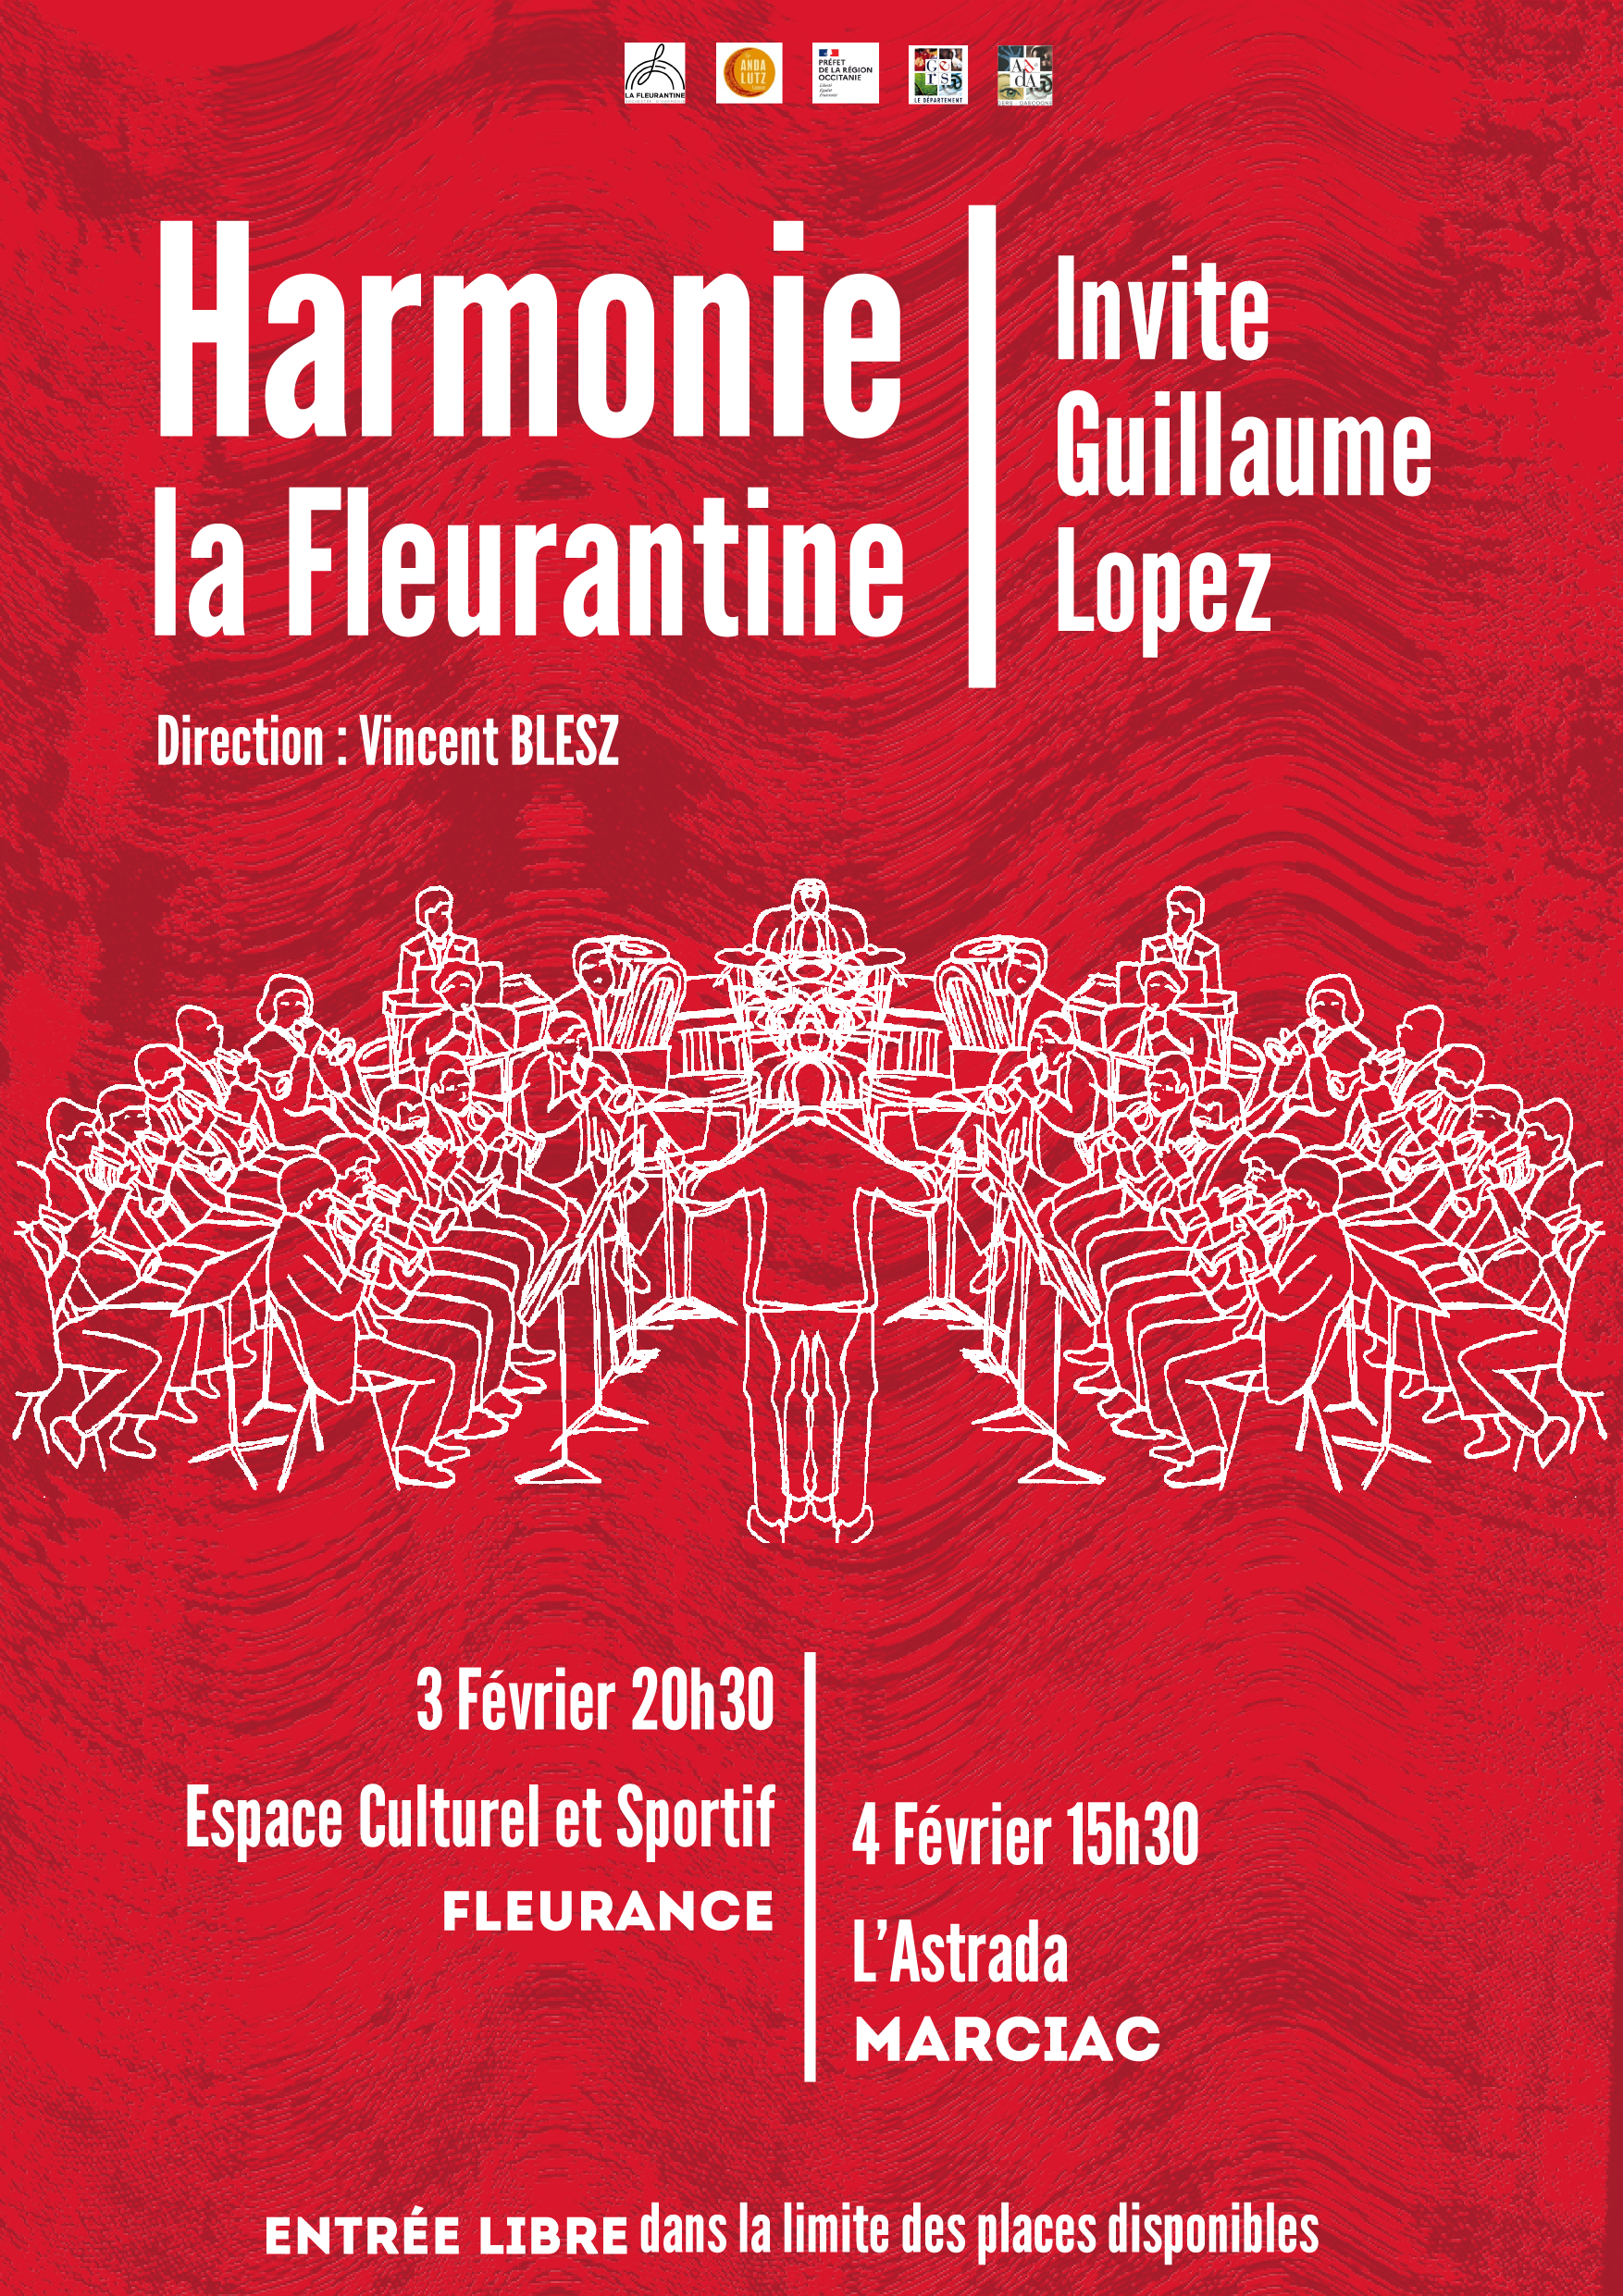 L’Harmonie La Fleurantine invite Guillaume Lopez 2